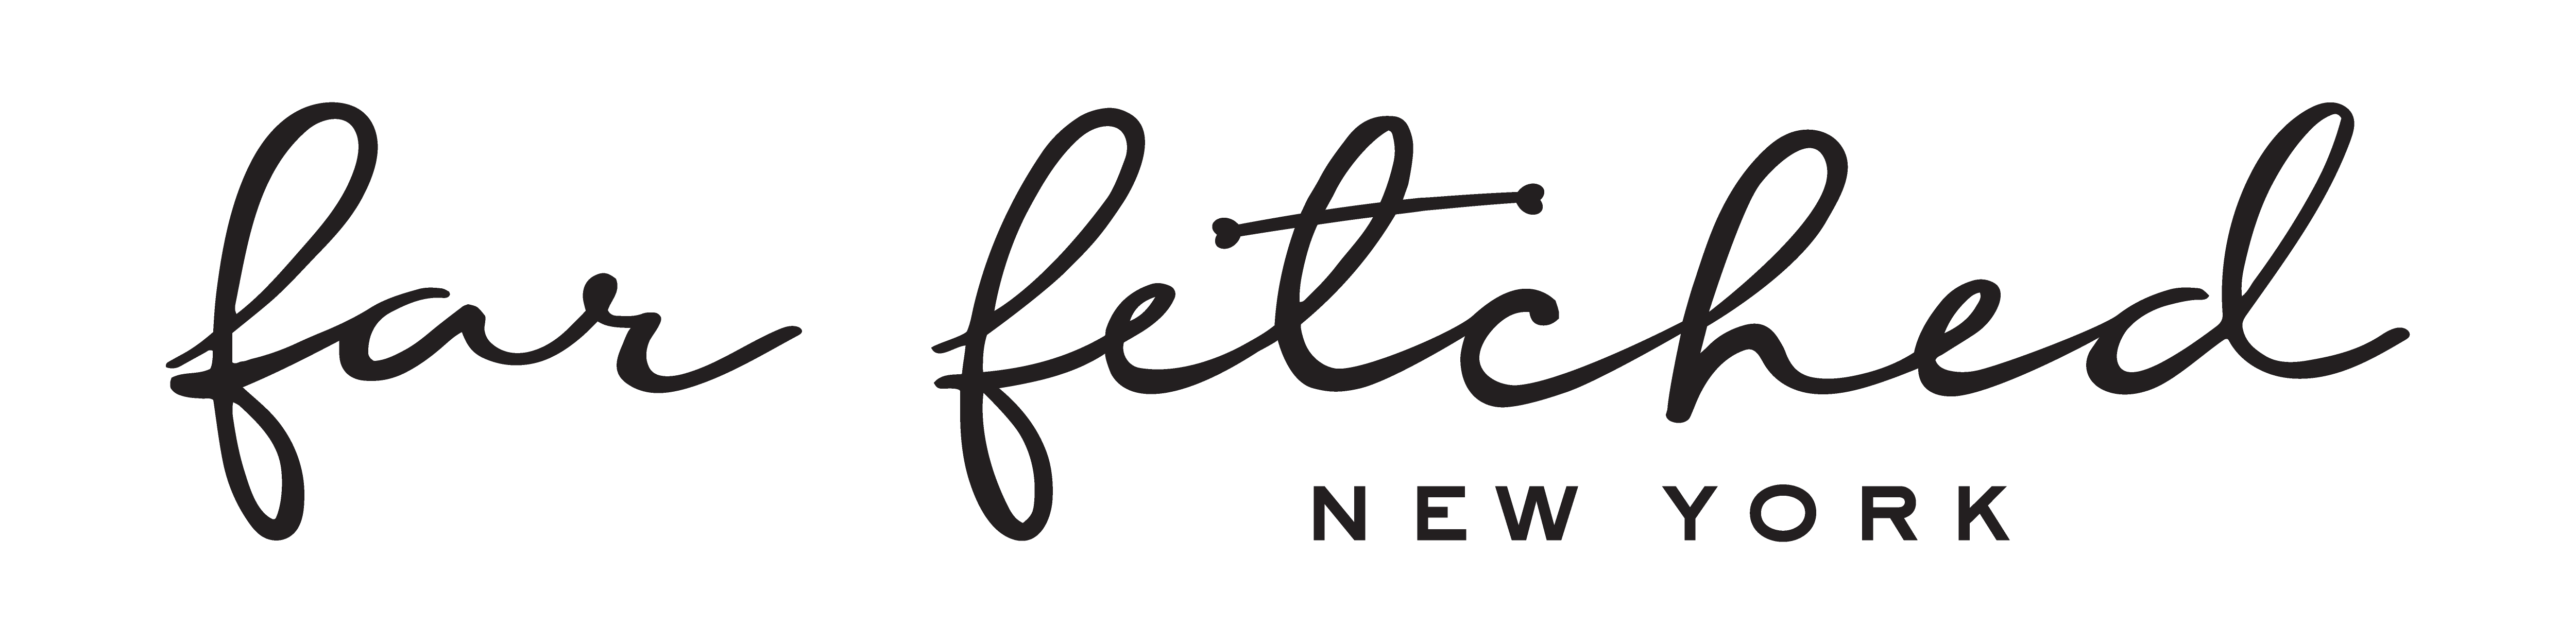 Elegant cursive logo reading 'far fetched new york' on a dark background, exemplifying sophisticated branding.